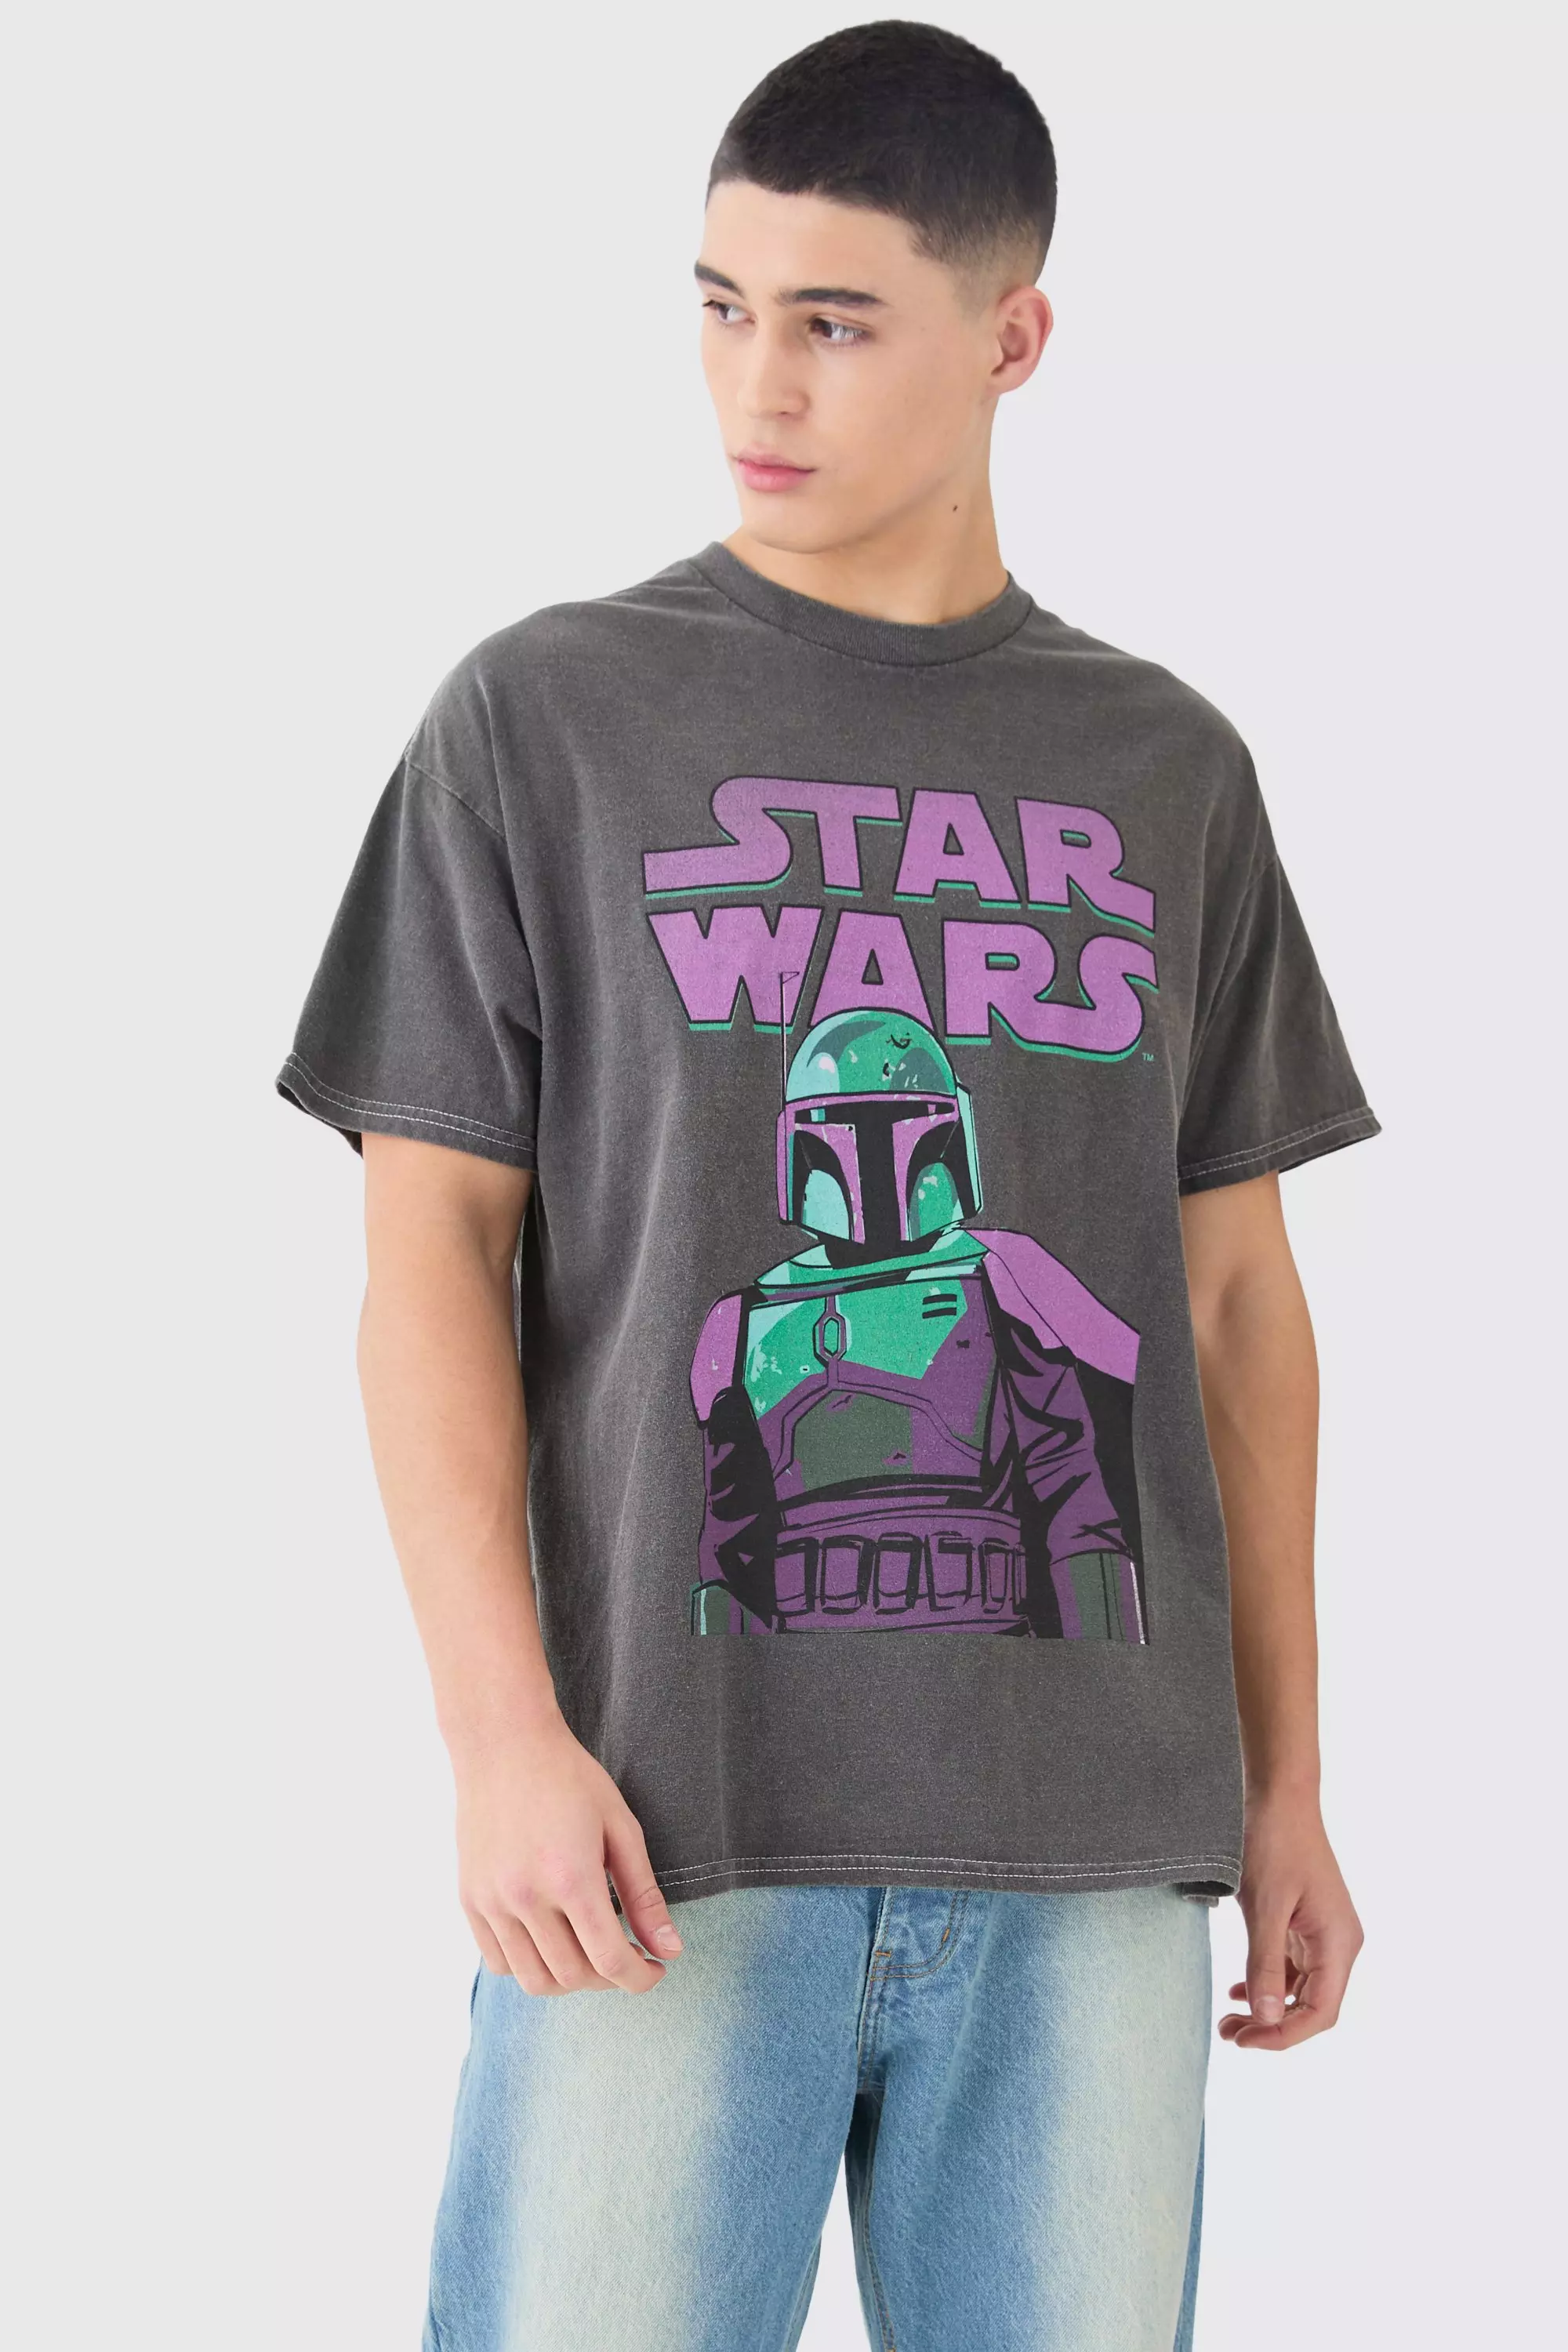 Men's Star Wars T-Shirts, Mandalorian Outfits